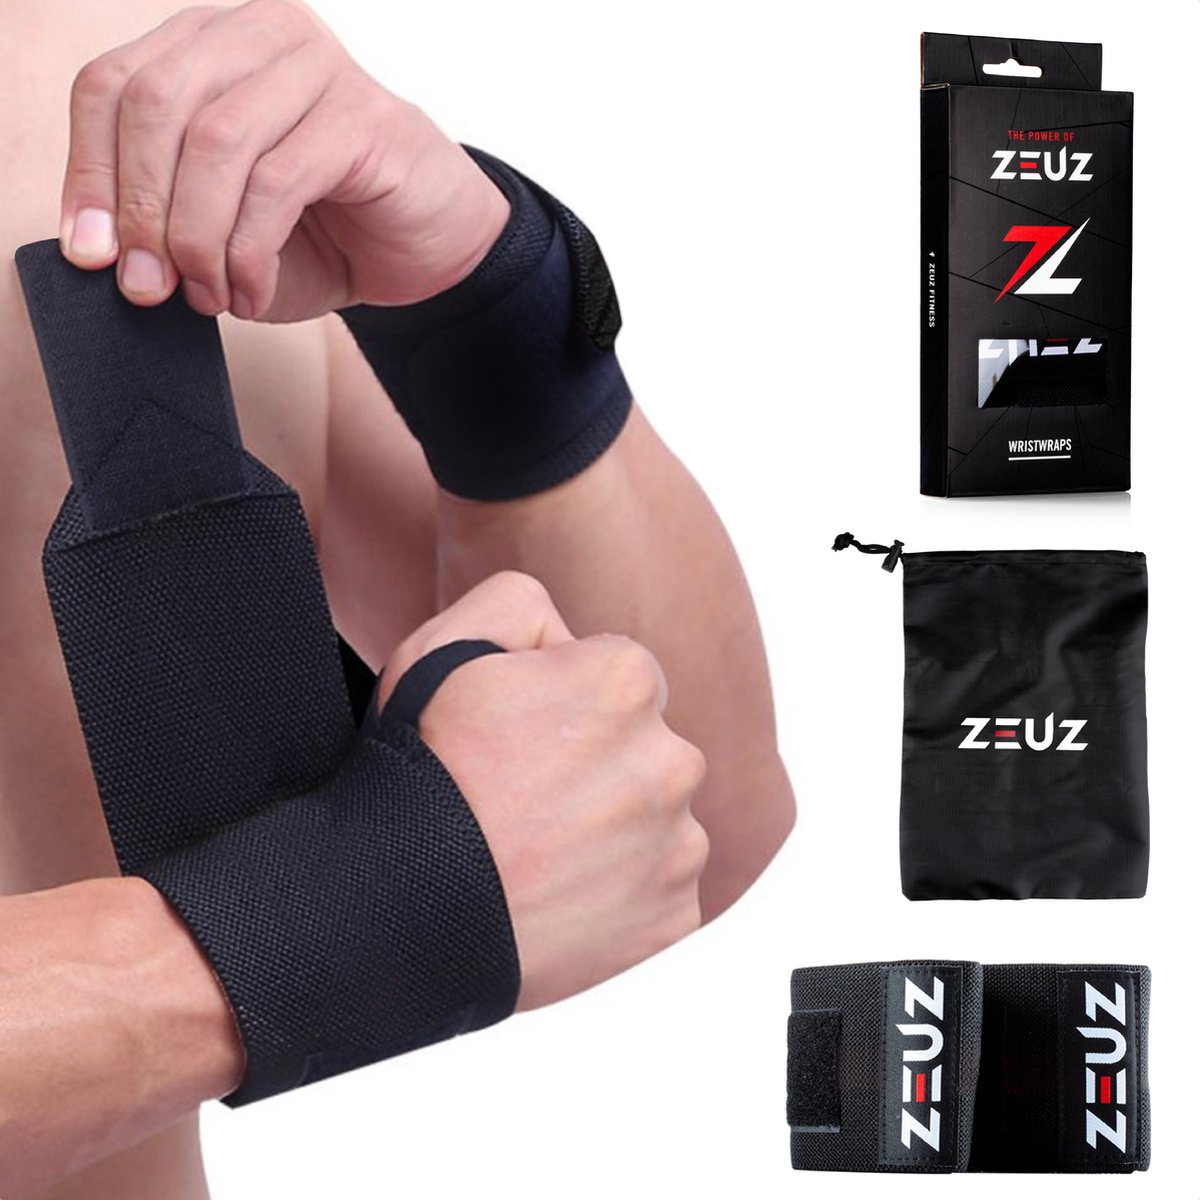 rijk Struikelen Onbevredigend ZEUZ® 2x Fitness & CrossFit Polsband - Wrist wraps – Krachttraining –  Polsbrace – Zwart | bol.com